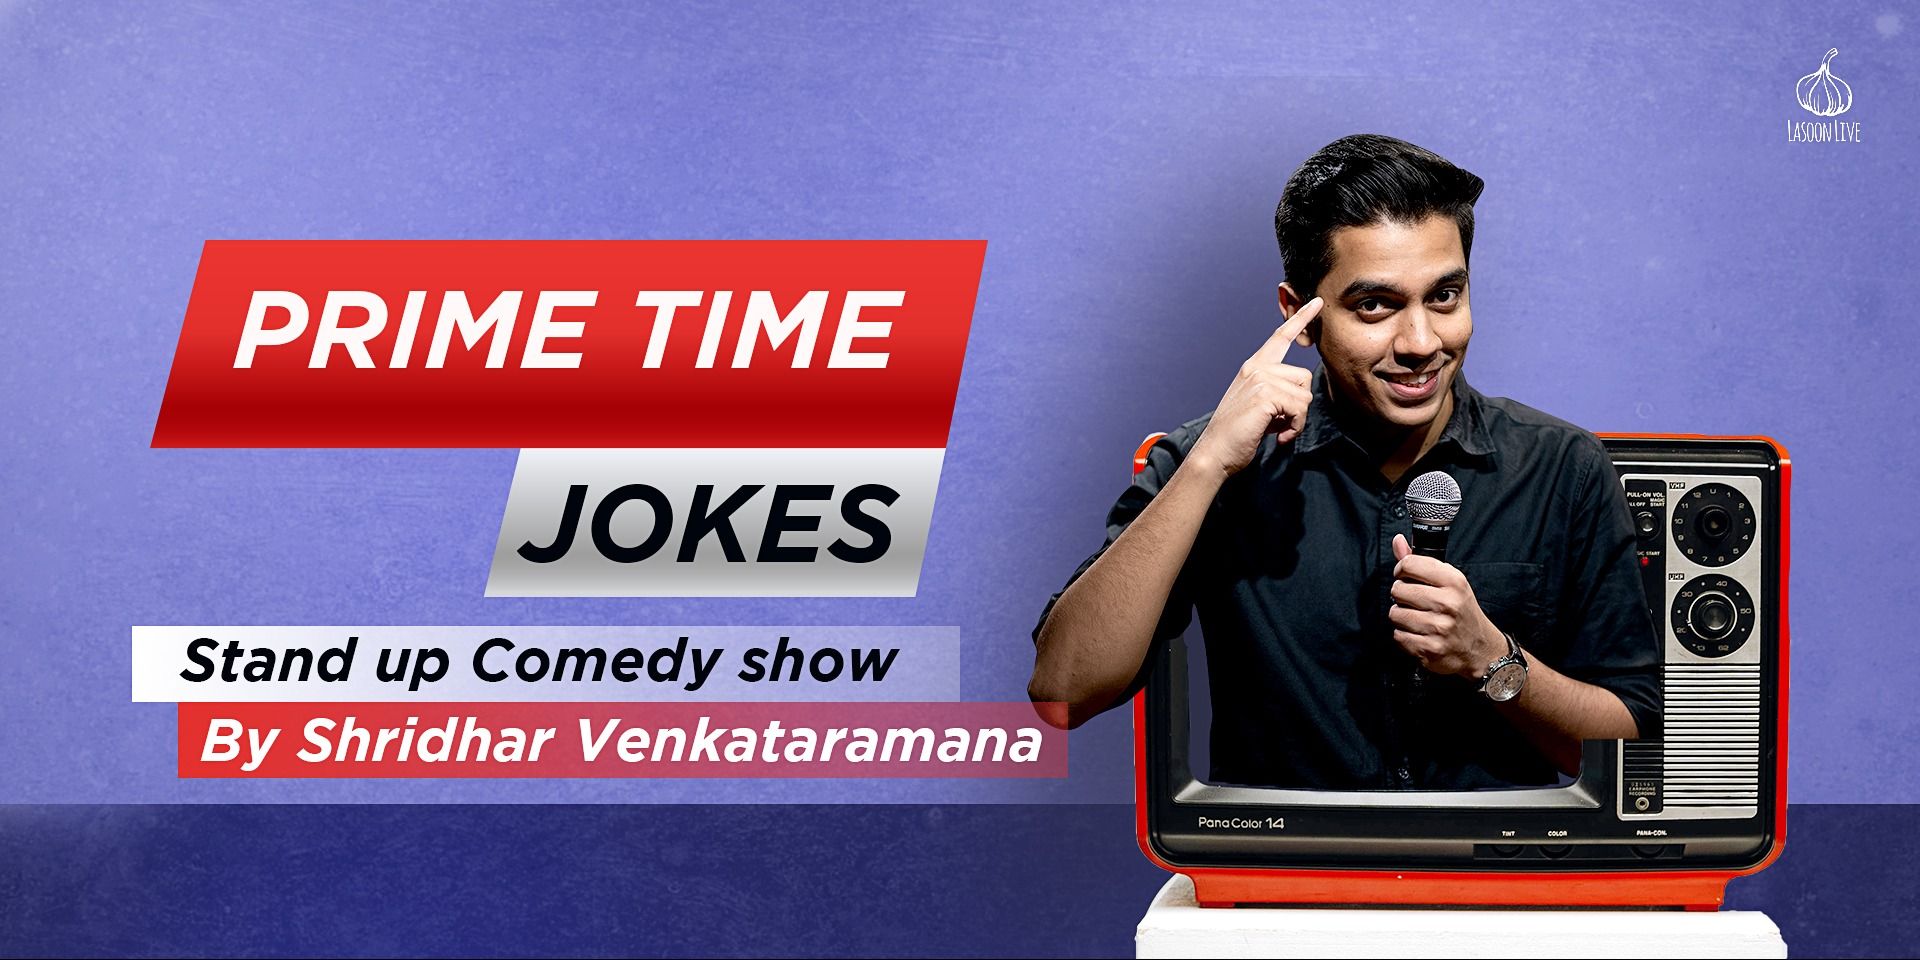 Prime Time Jokes – Shridhar Venkataramana (Comedy) in Hyderabad